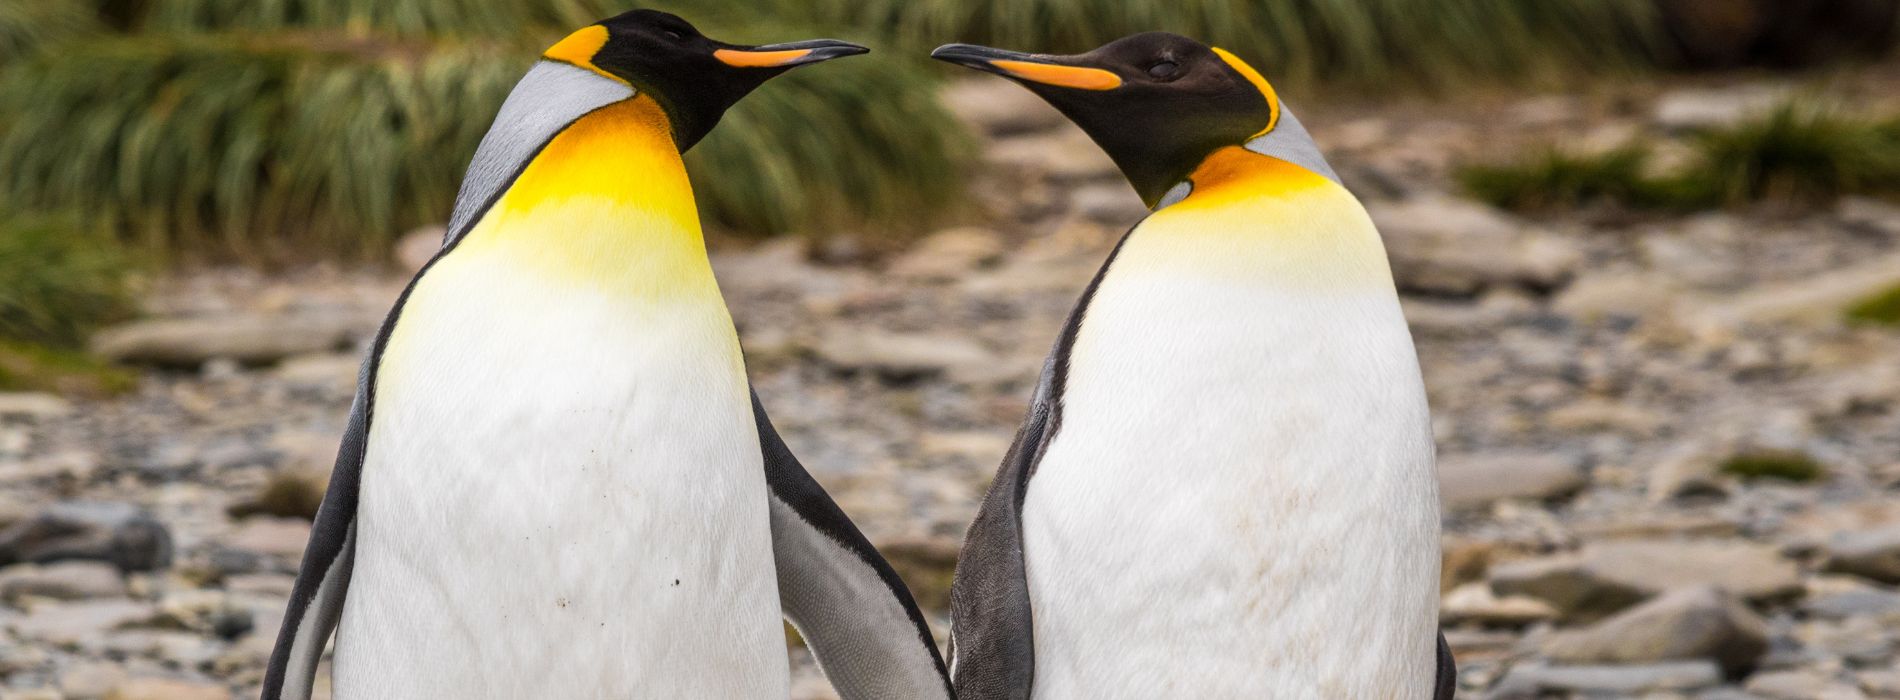 Do penguins smell bad?